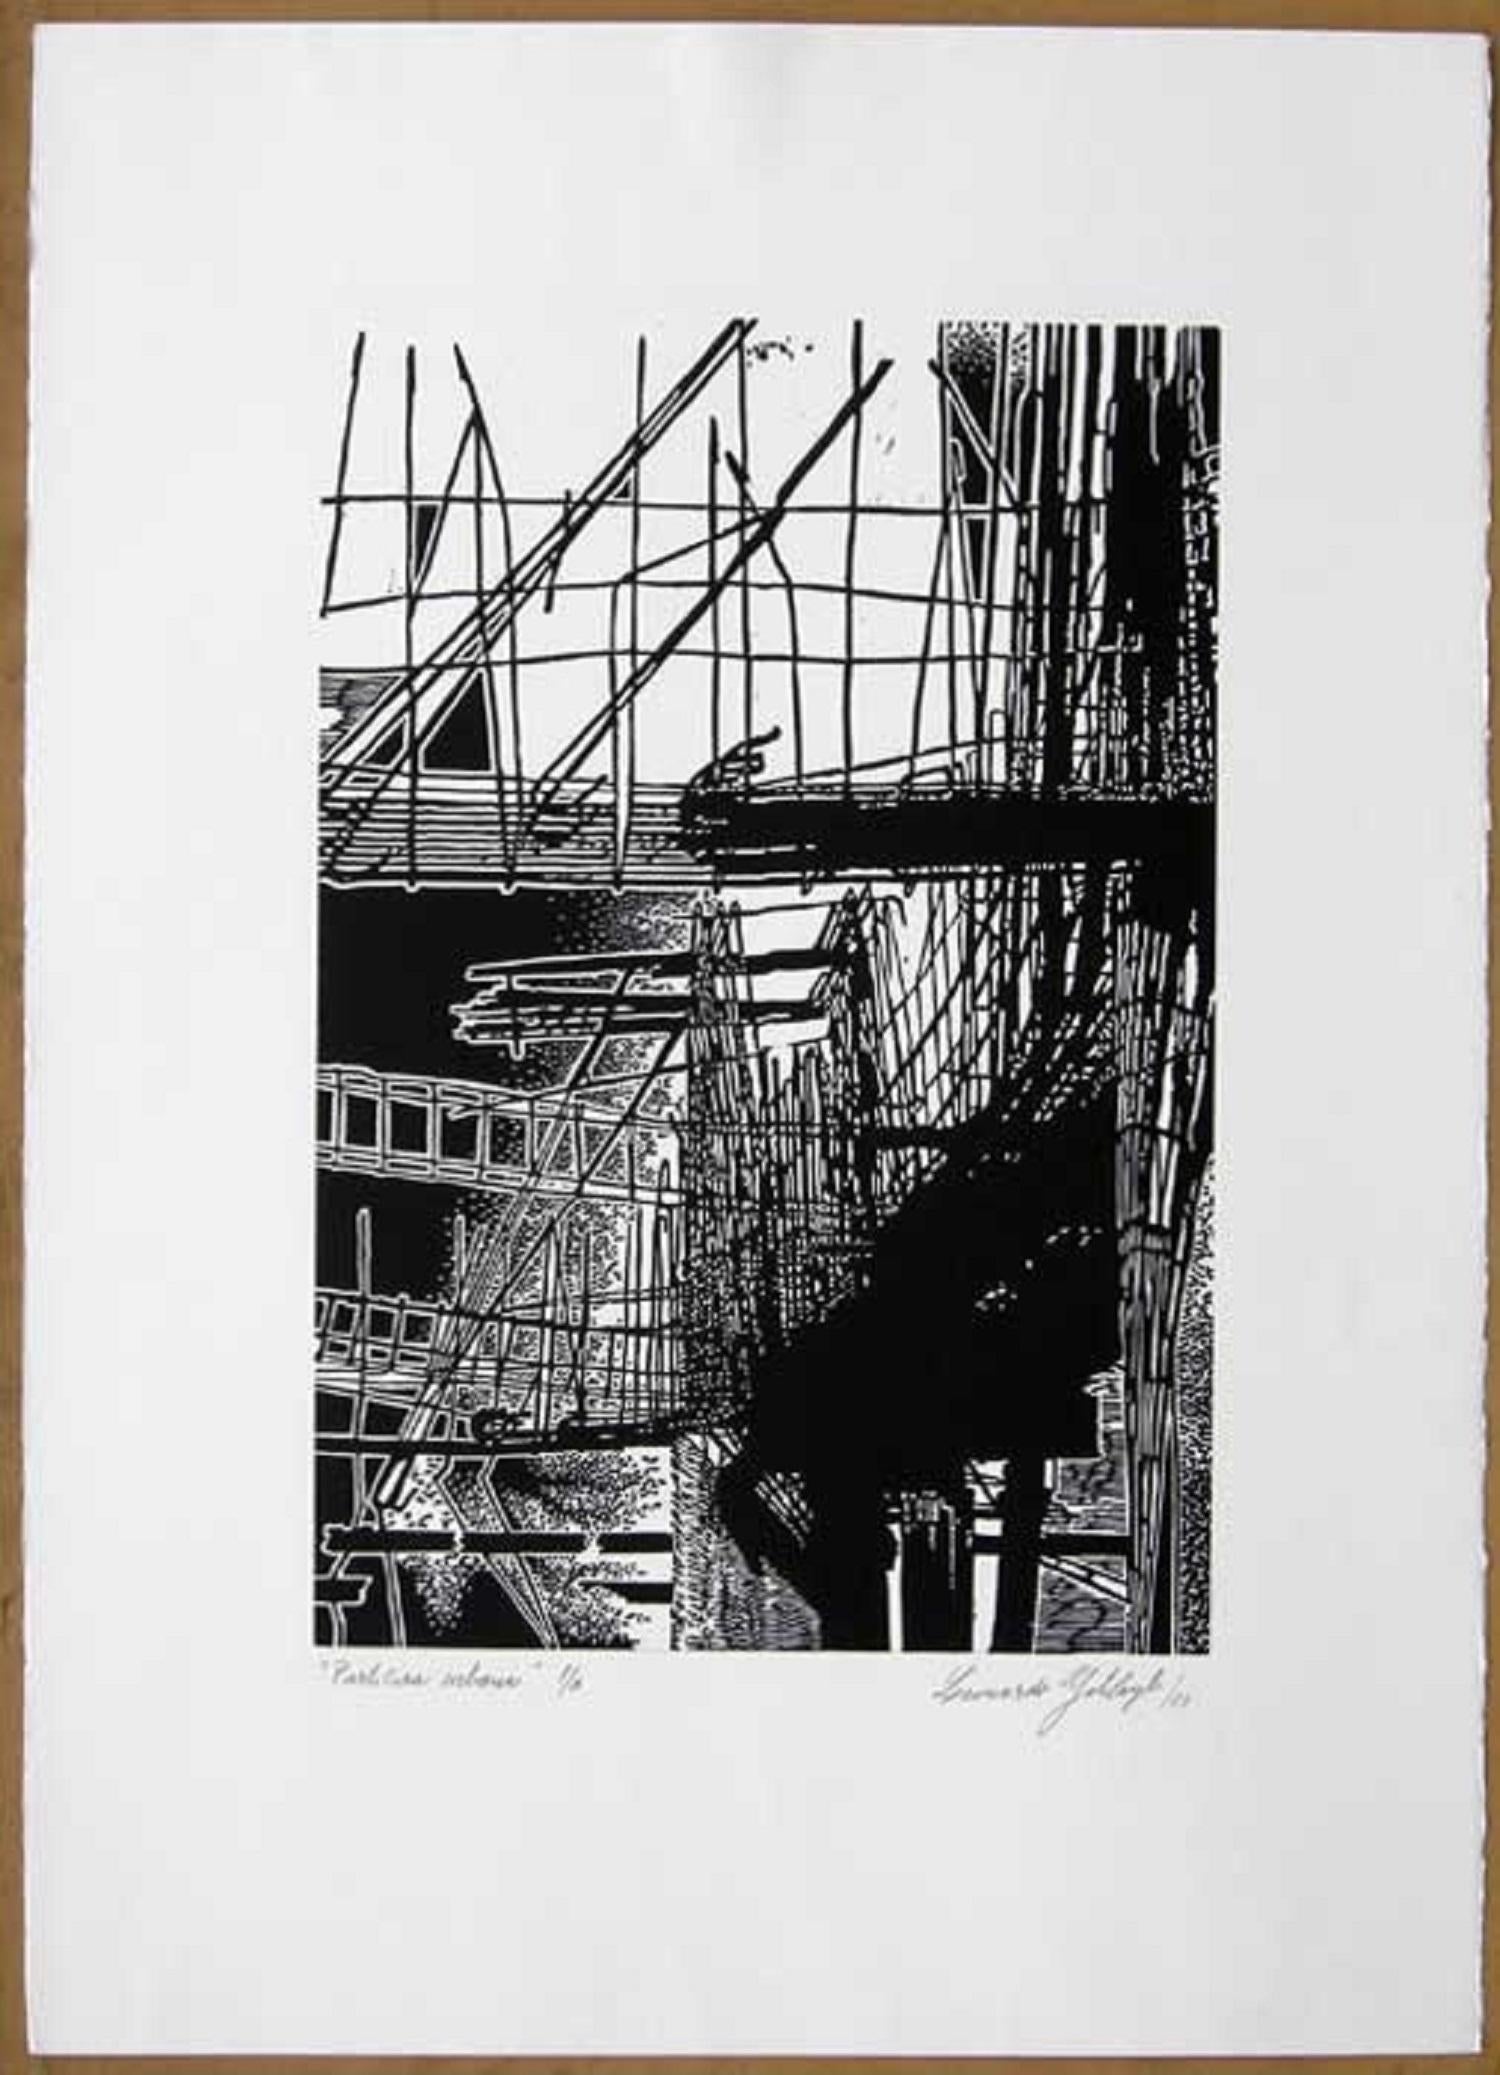 Leonardo Gotleyb, ¨Partitura urbana¨, 2003, Holzschnitt, 27.6x19.7 in